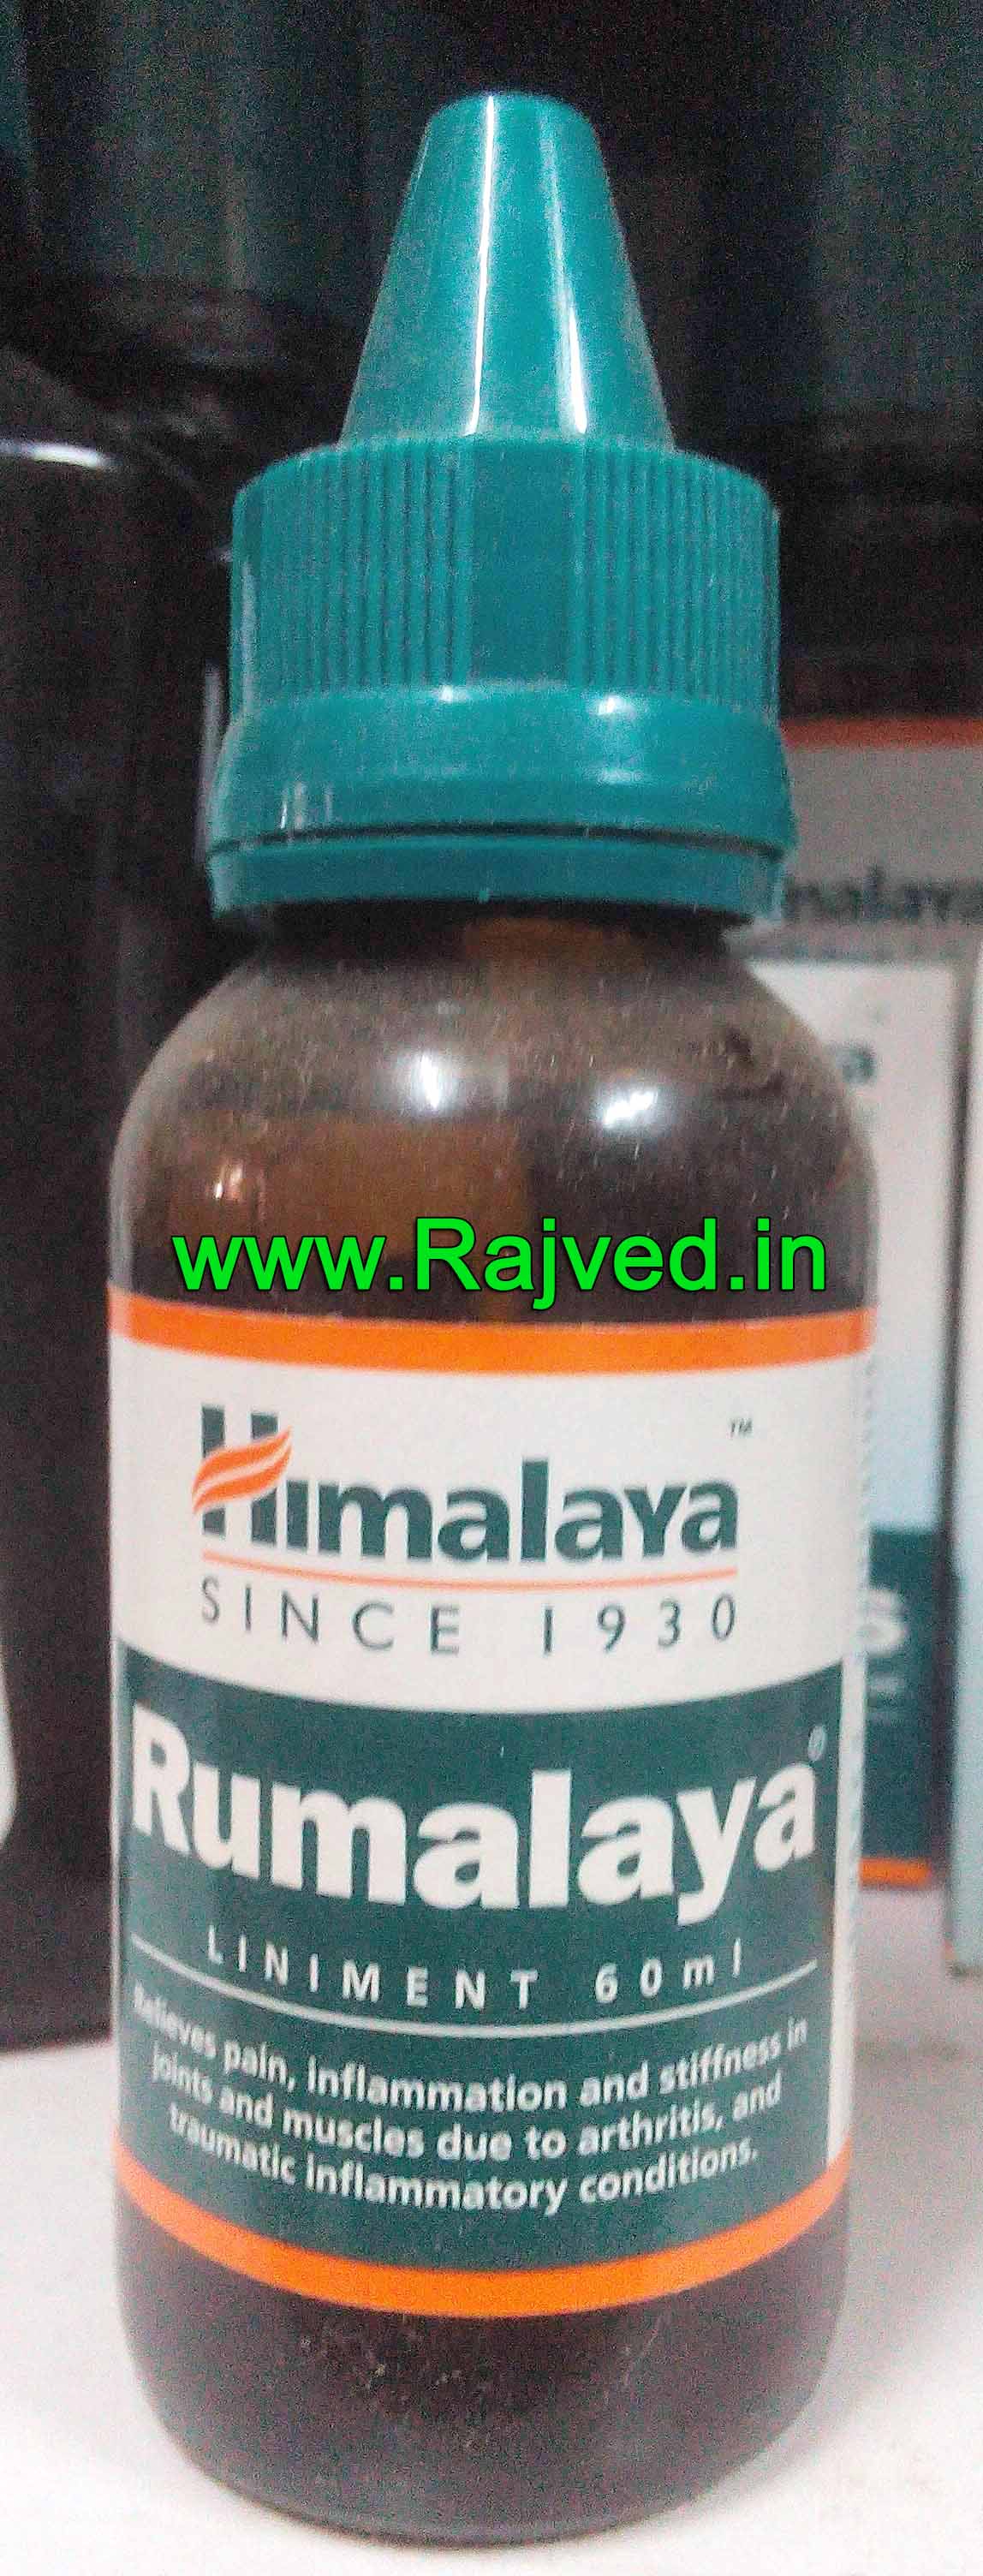 rumalaya liniment 60 ml the himalaya drug company